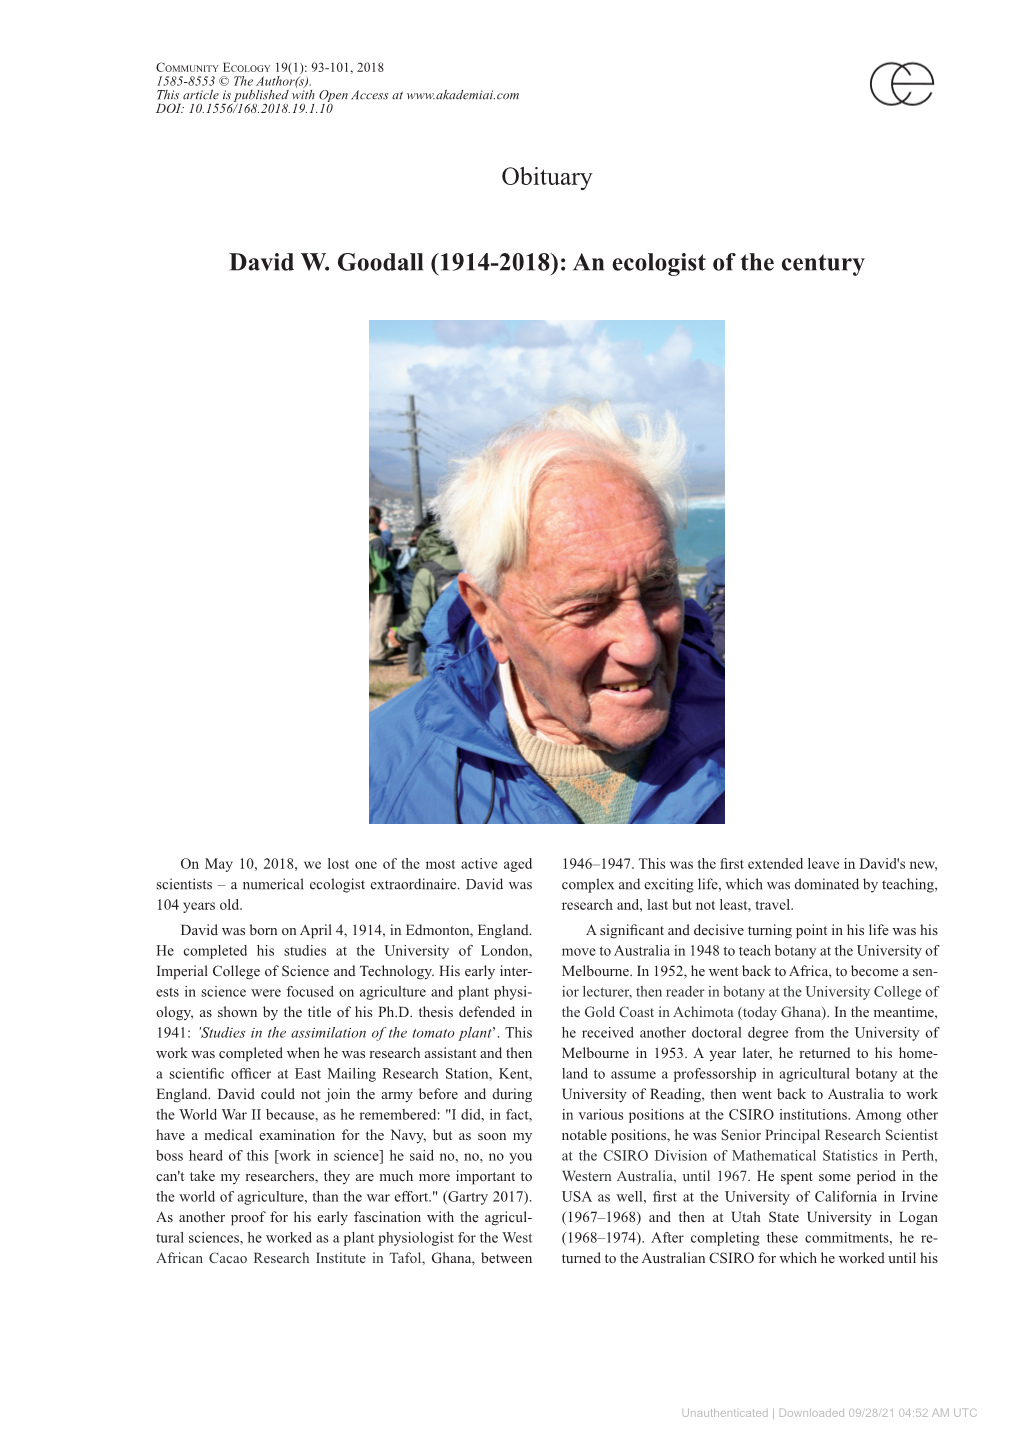 Obituary David W. Goodall